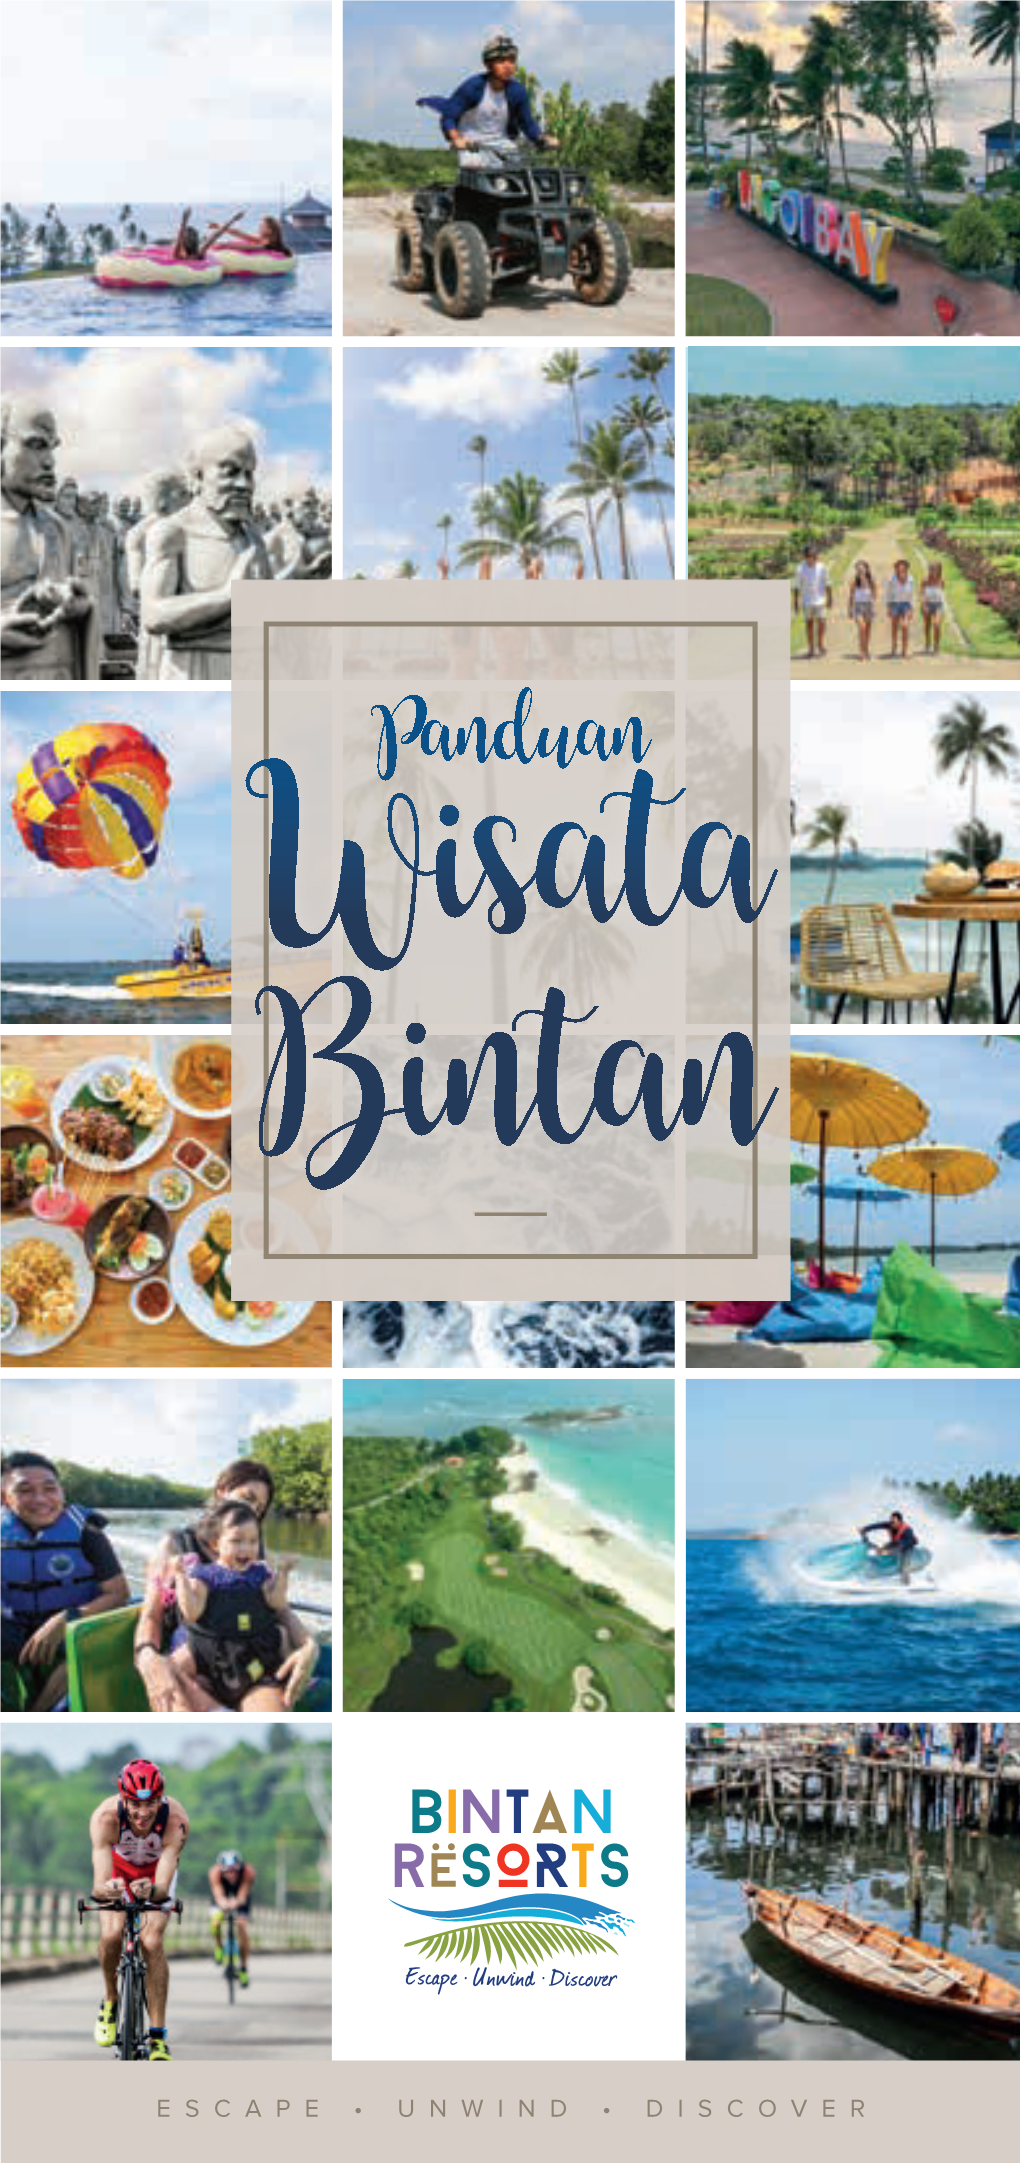 Wisata Bintan